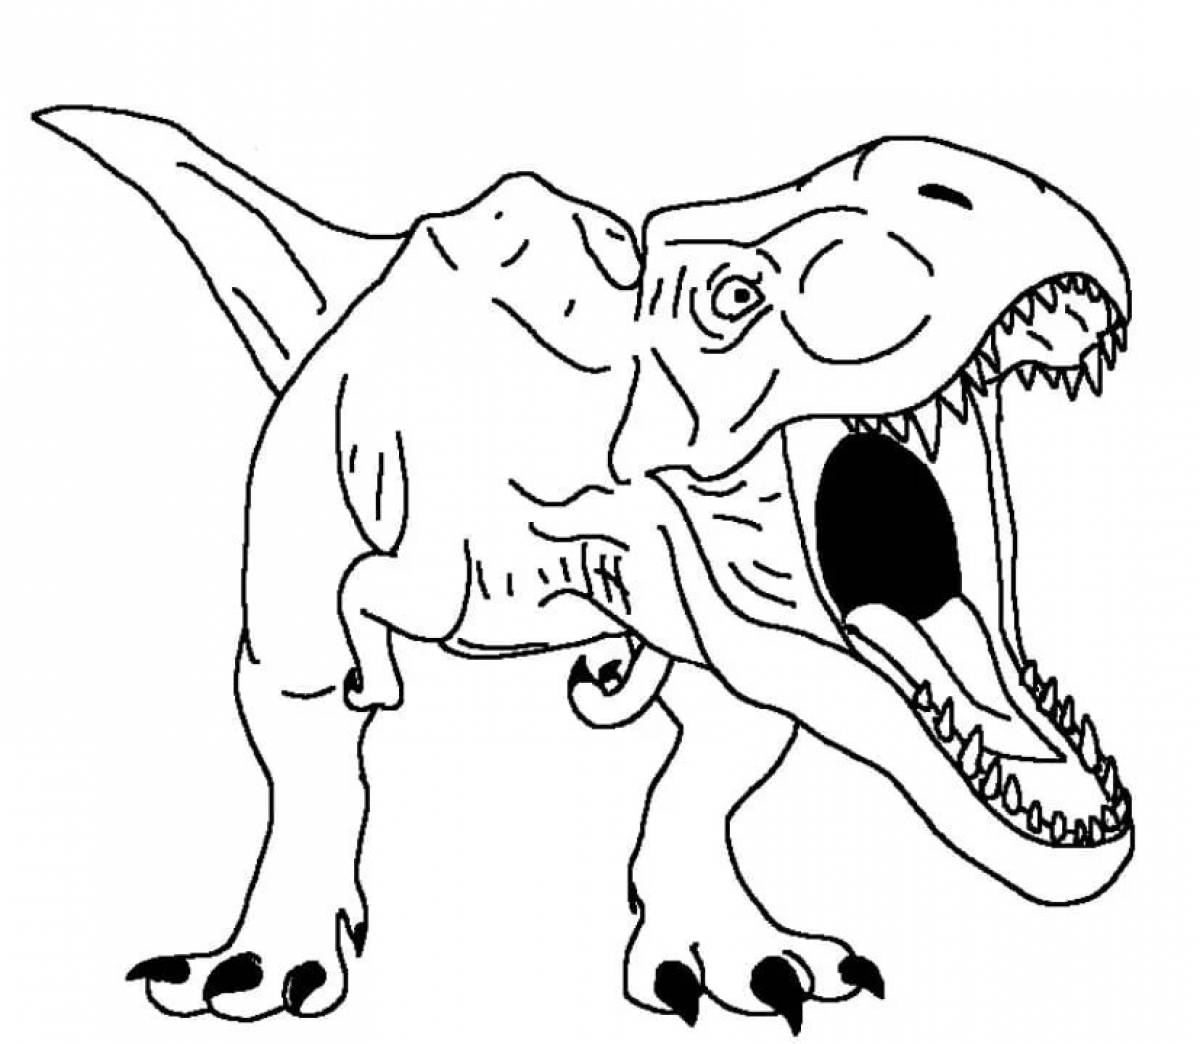 Dinosaur drawings for #7